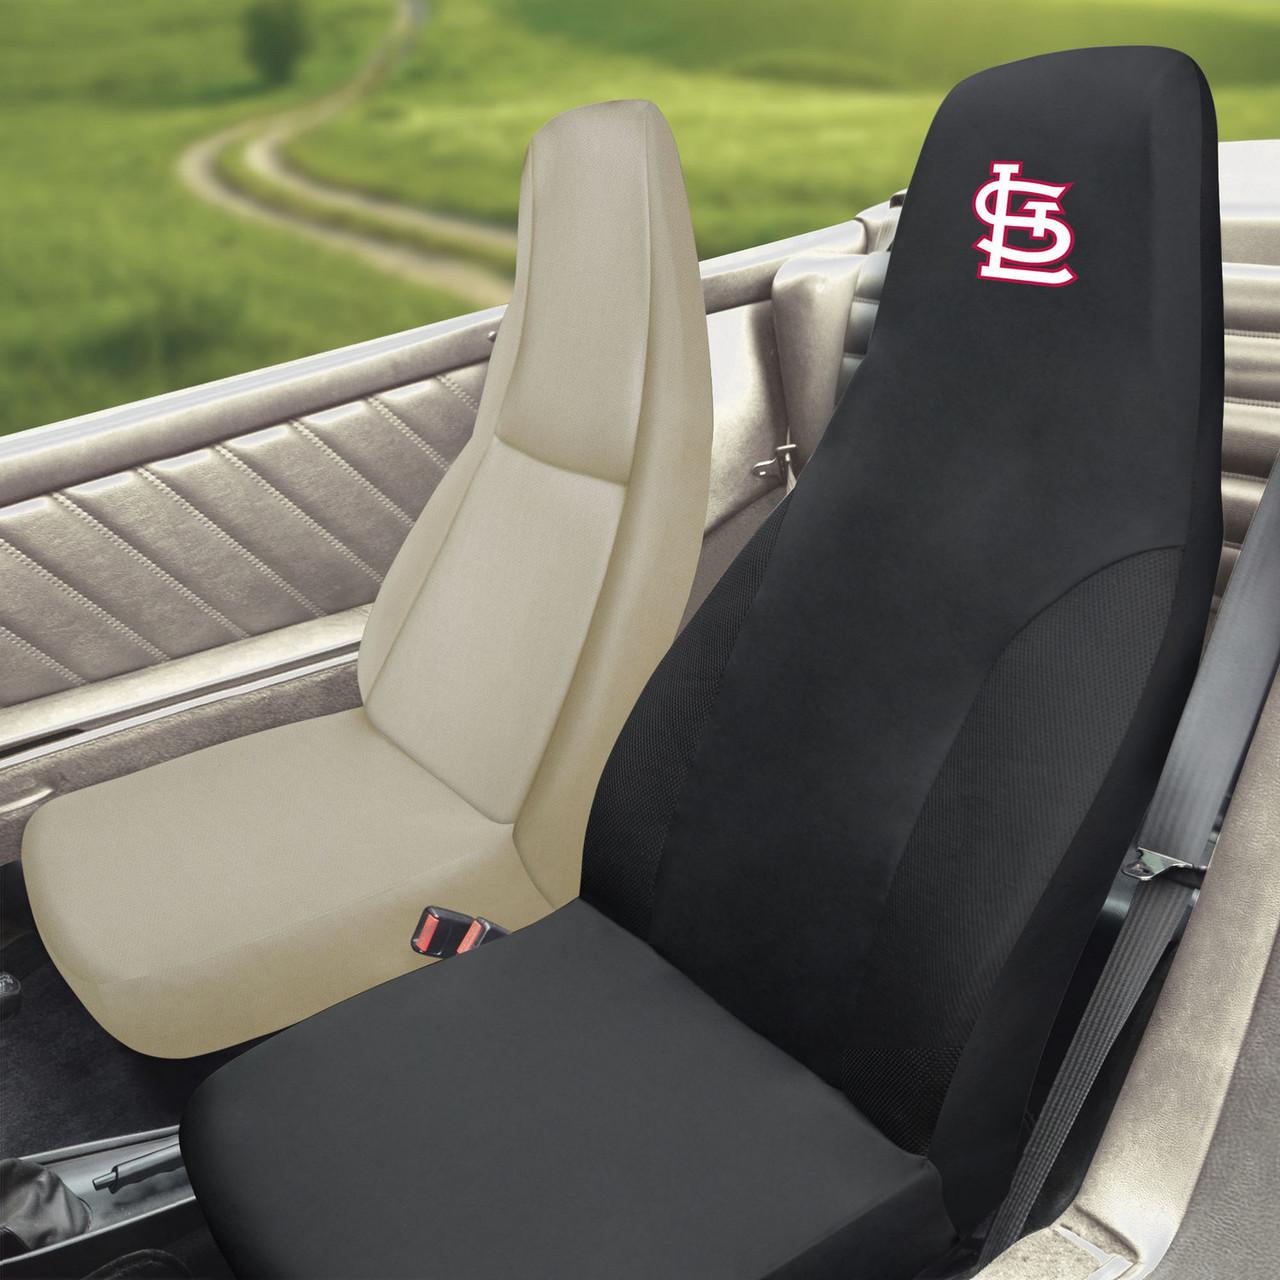 St. Louis Cardinals Black Car Seat Cover - Auto Accessories - MLB